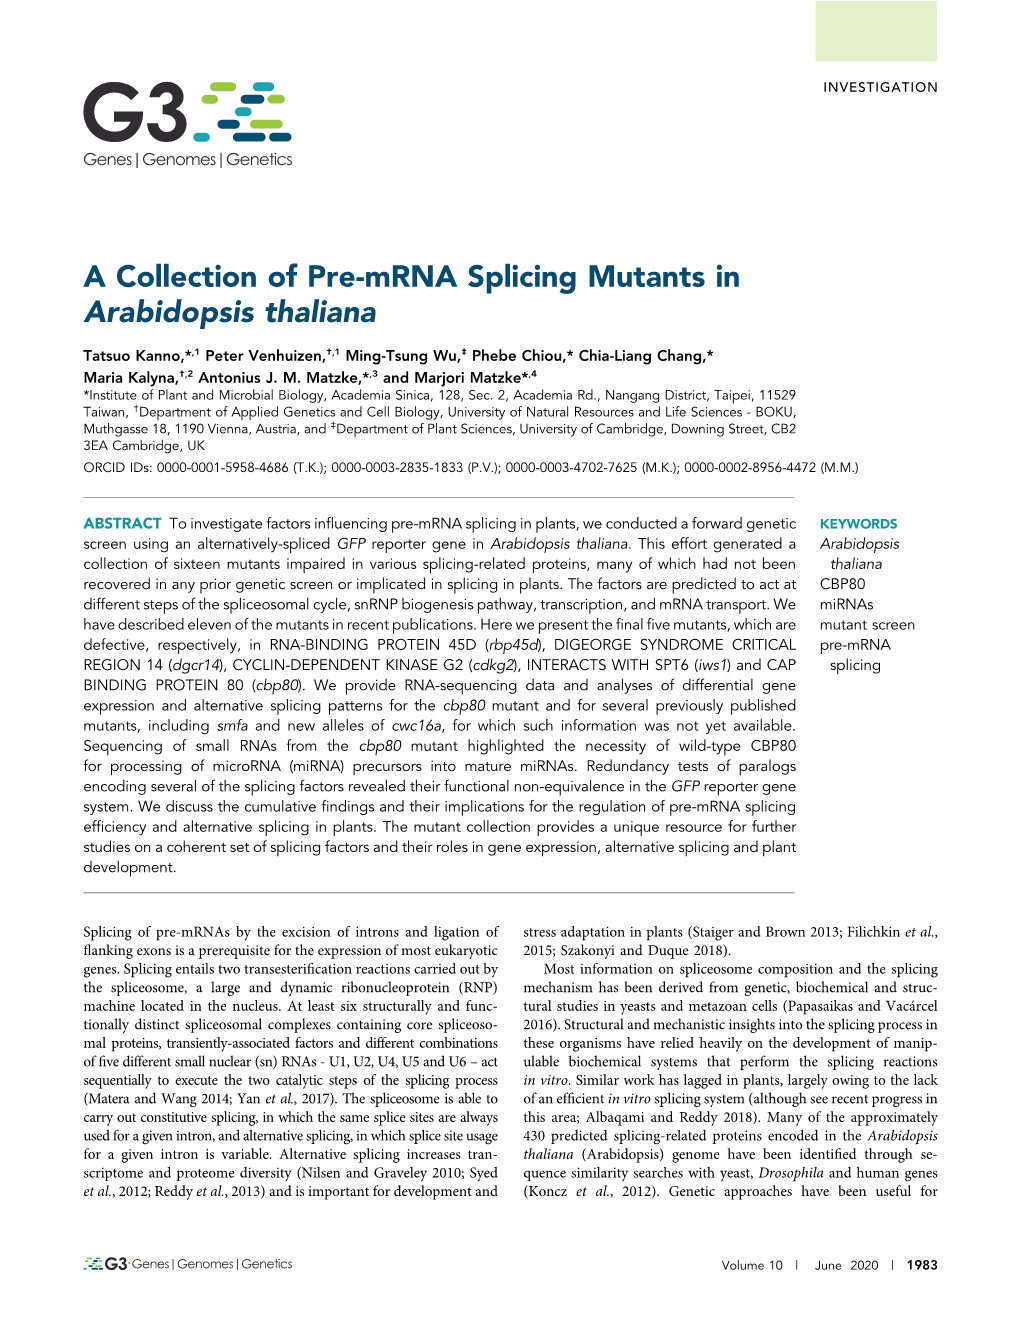 A Collection of Pre-Mrna Splicing Mutants in Arabidopsis Thaliana